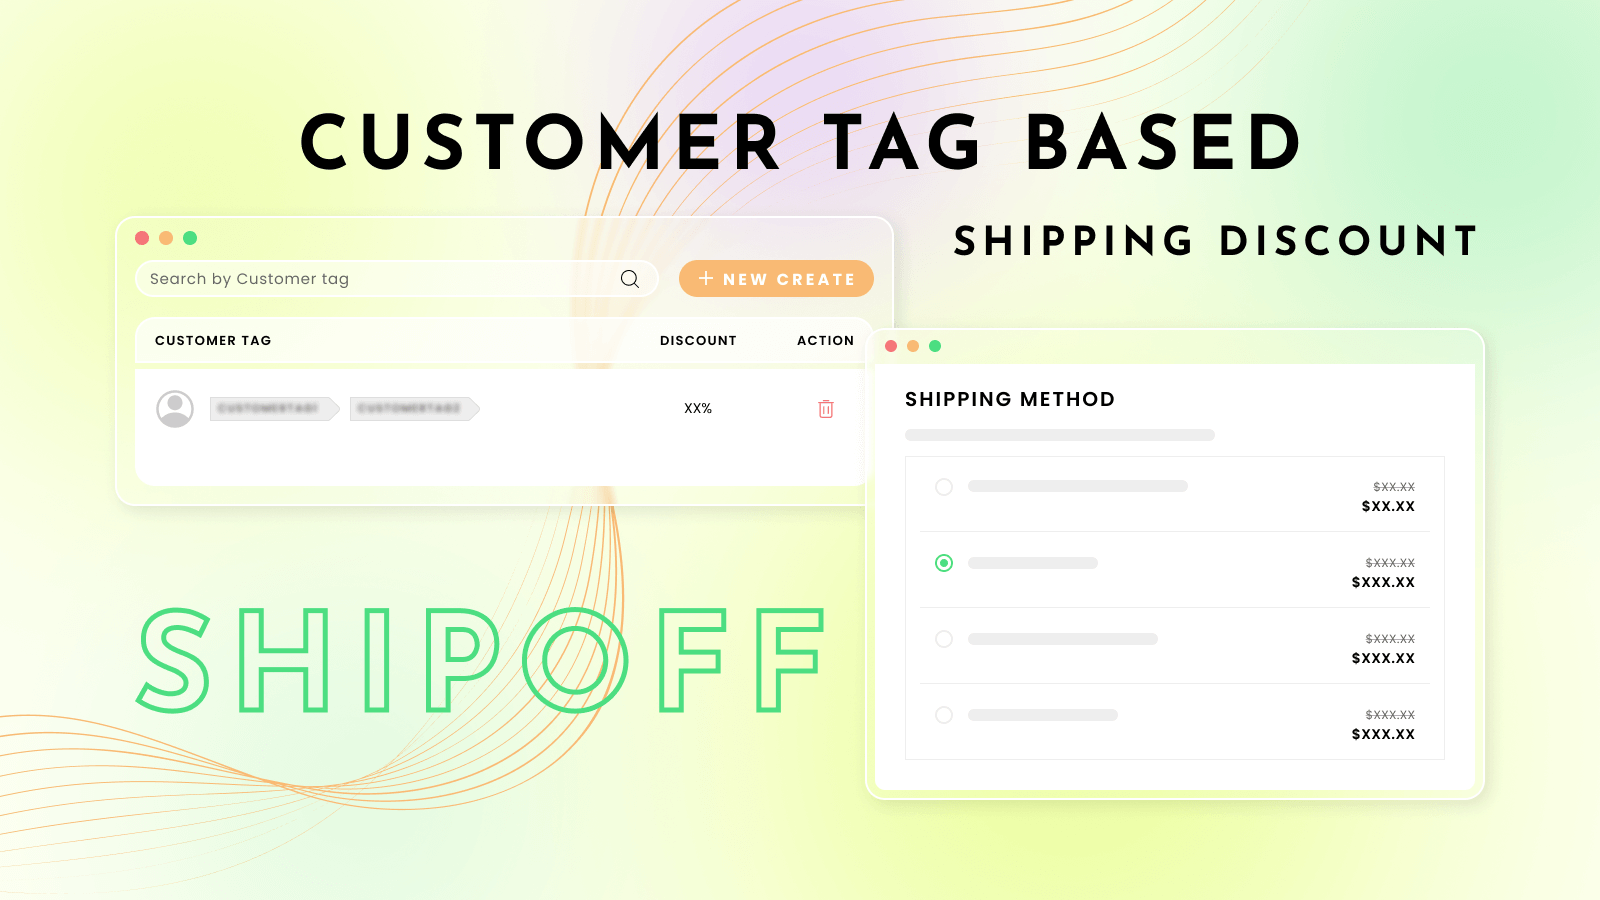 Customer tag based shipping discount